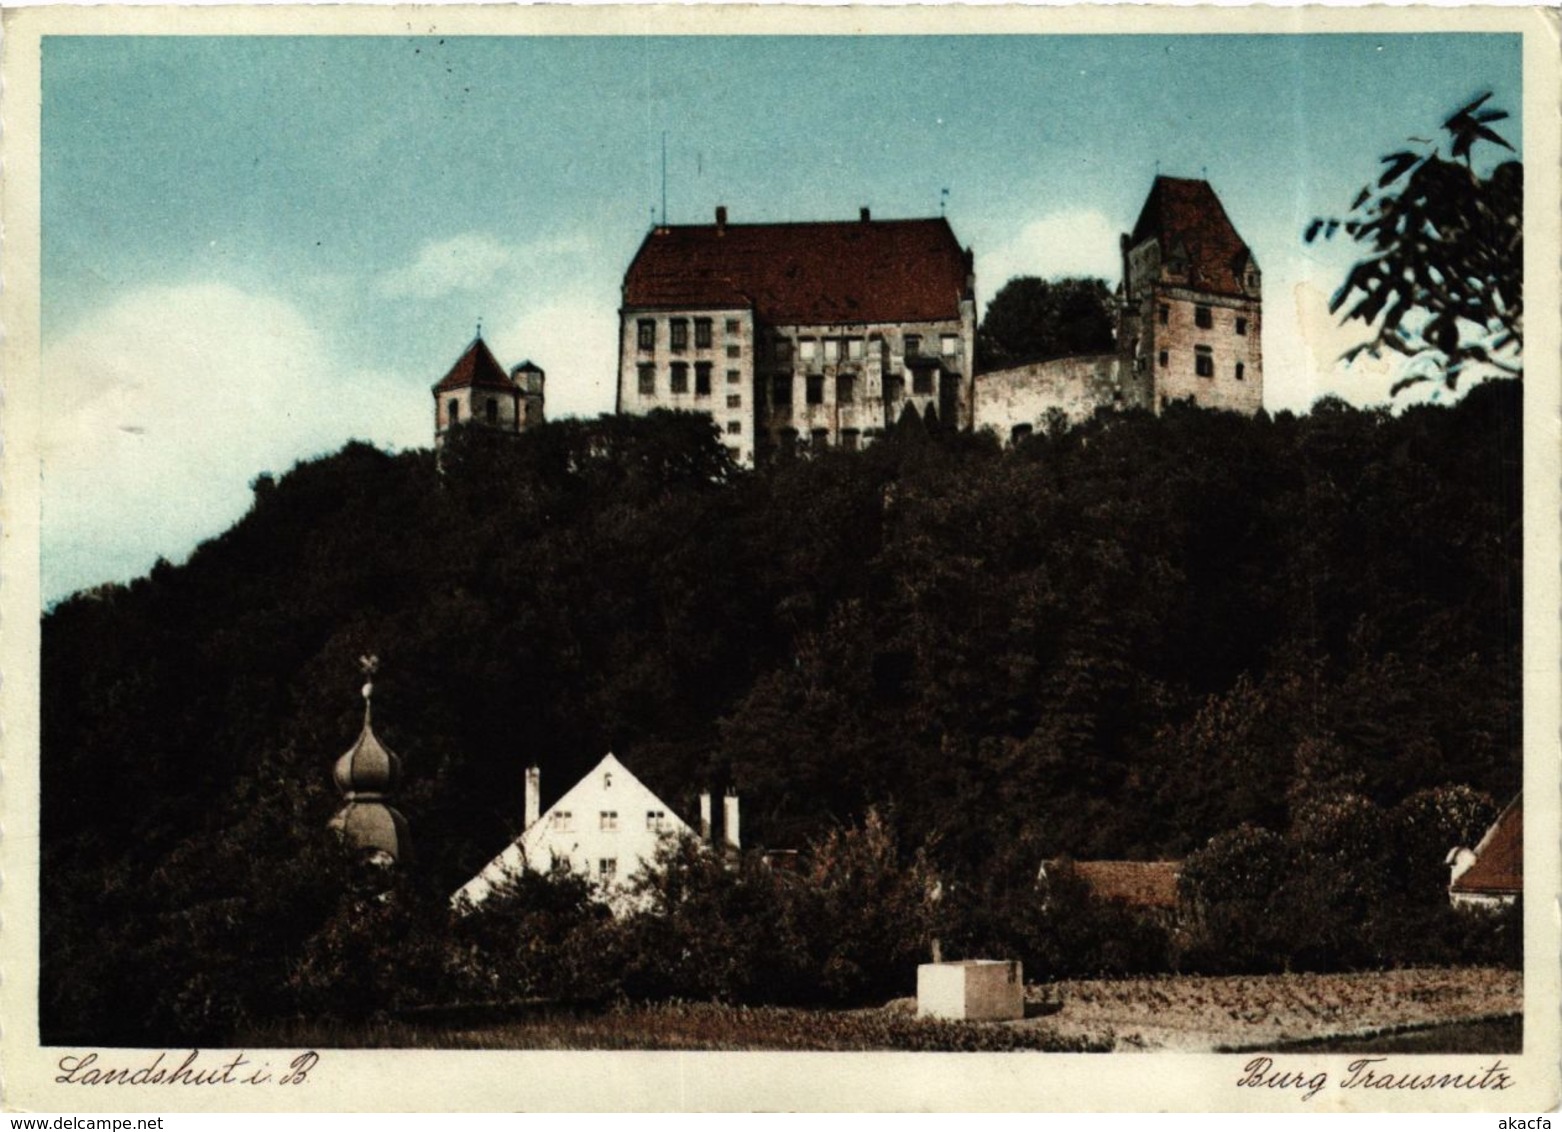 CPA AK Landshut Burg Trausnitz GERMANY (891862) - Landshut